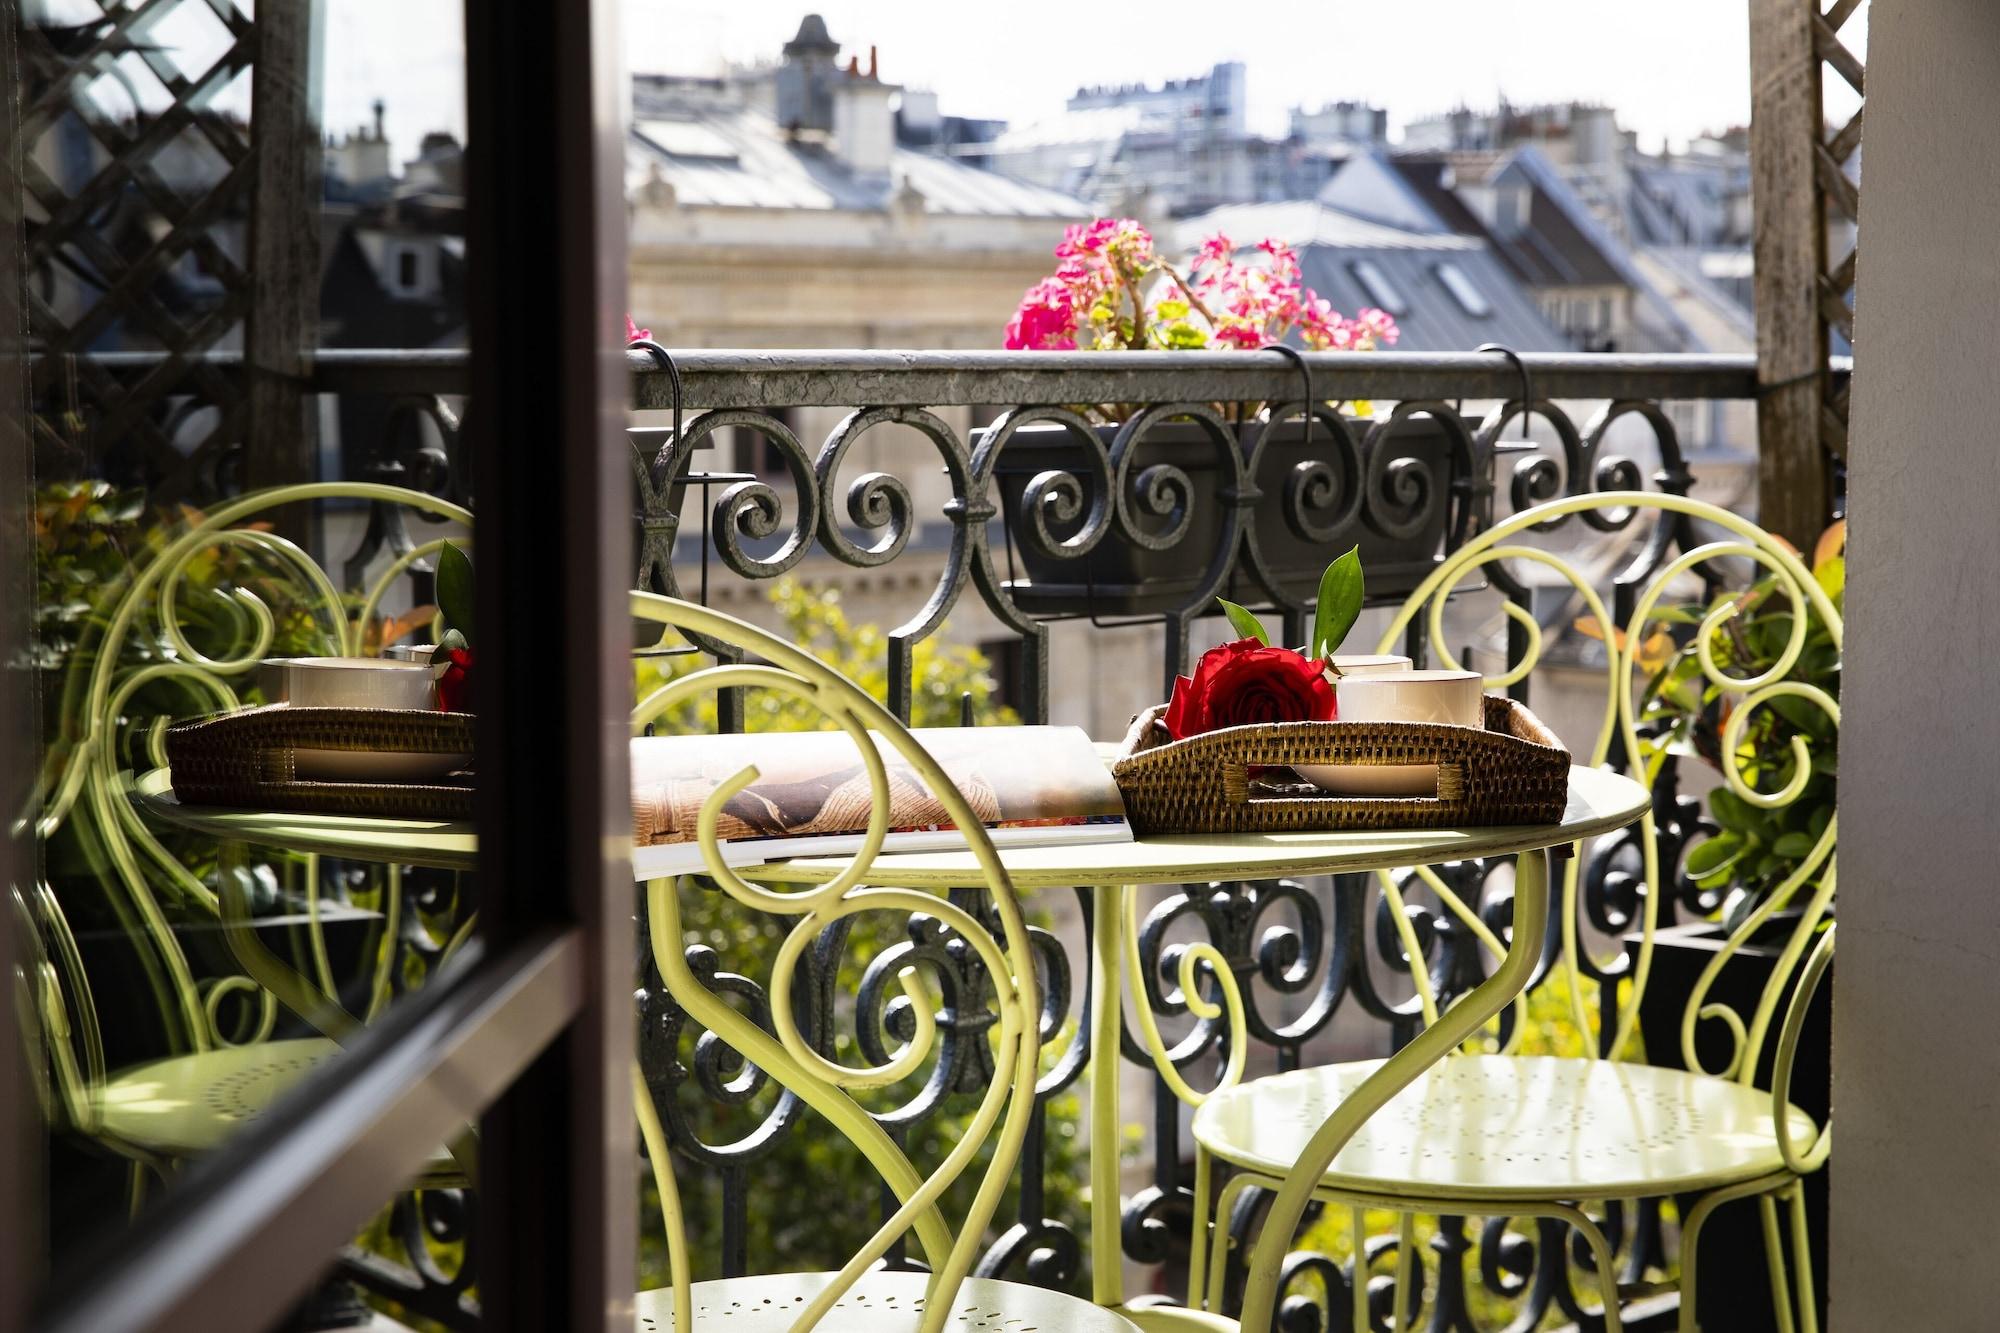 Hotel Britannique Παρίσι Εξωτερικό φωτογραφία